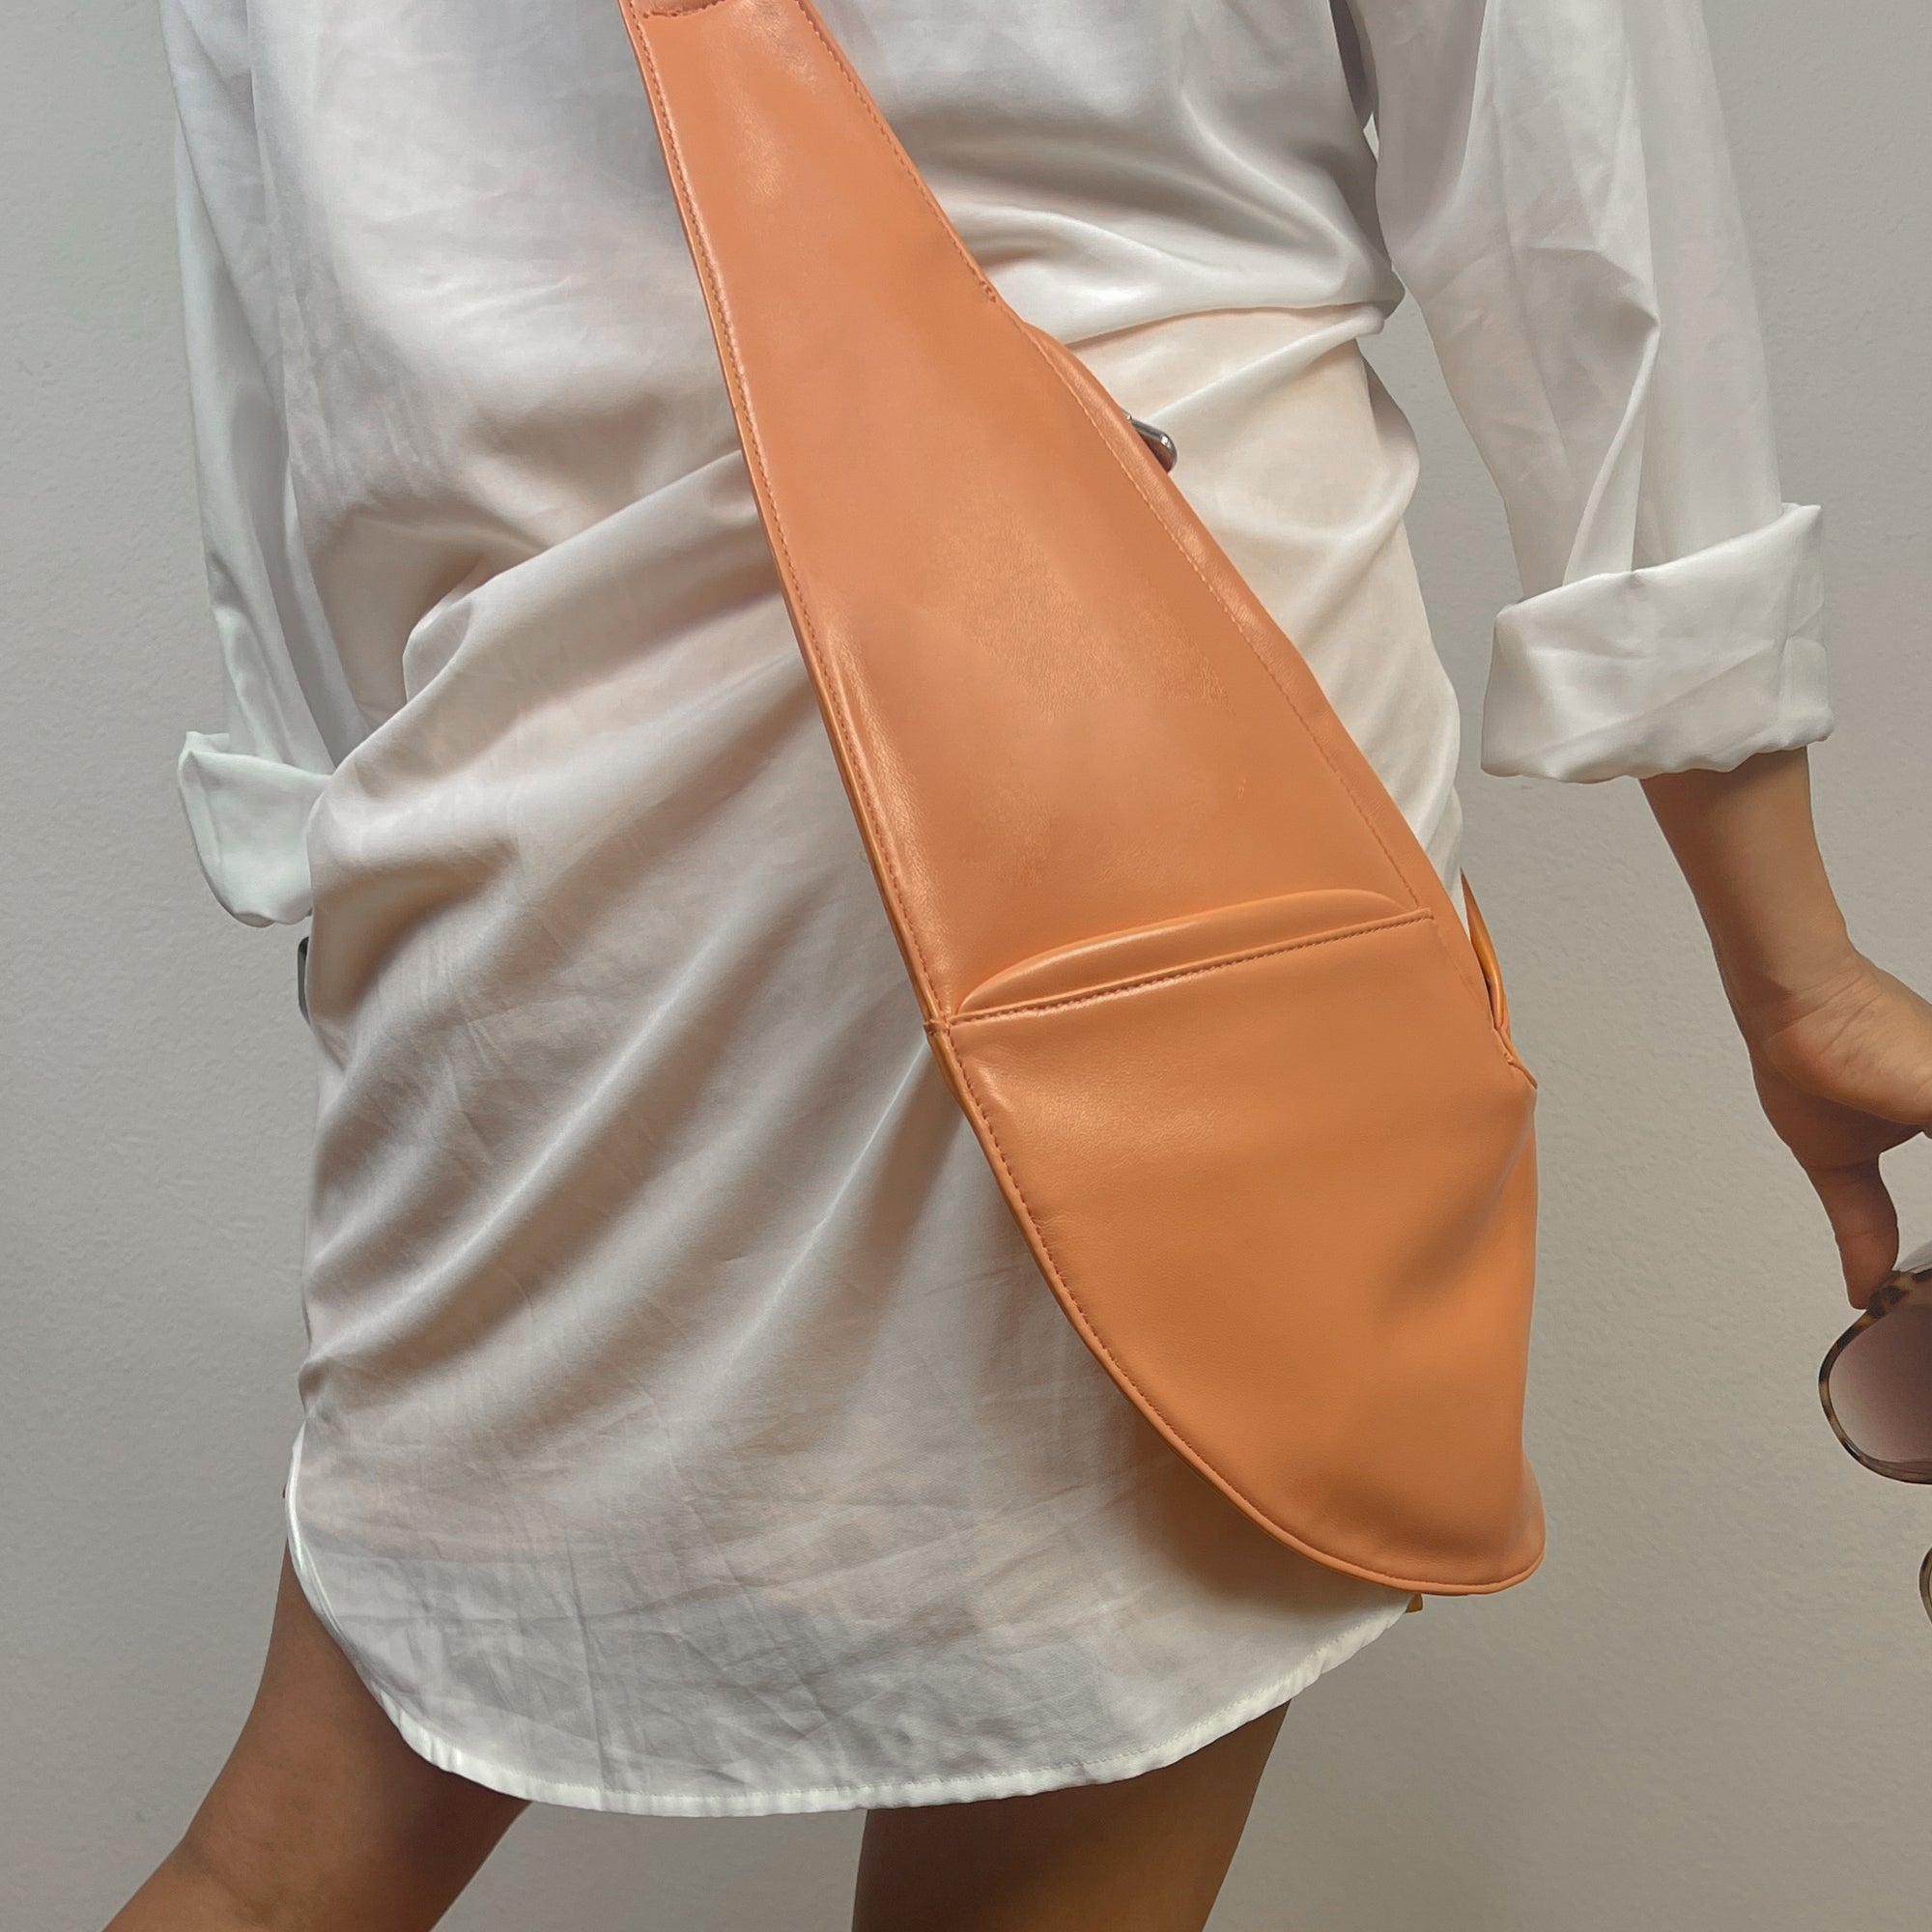 WILBB sash Bag Men's Chest Bag Practical Bag Men's and Women's Clothing  Chest (Color : B) : Amazon.co.uk: Fashion